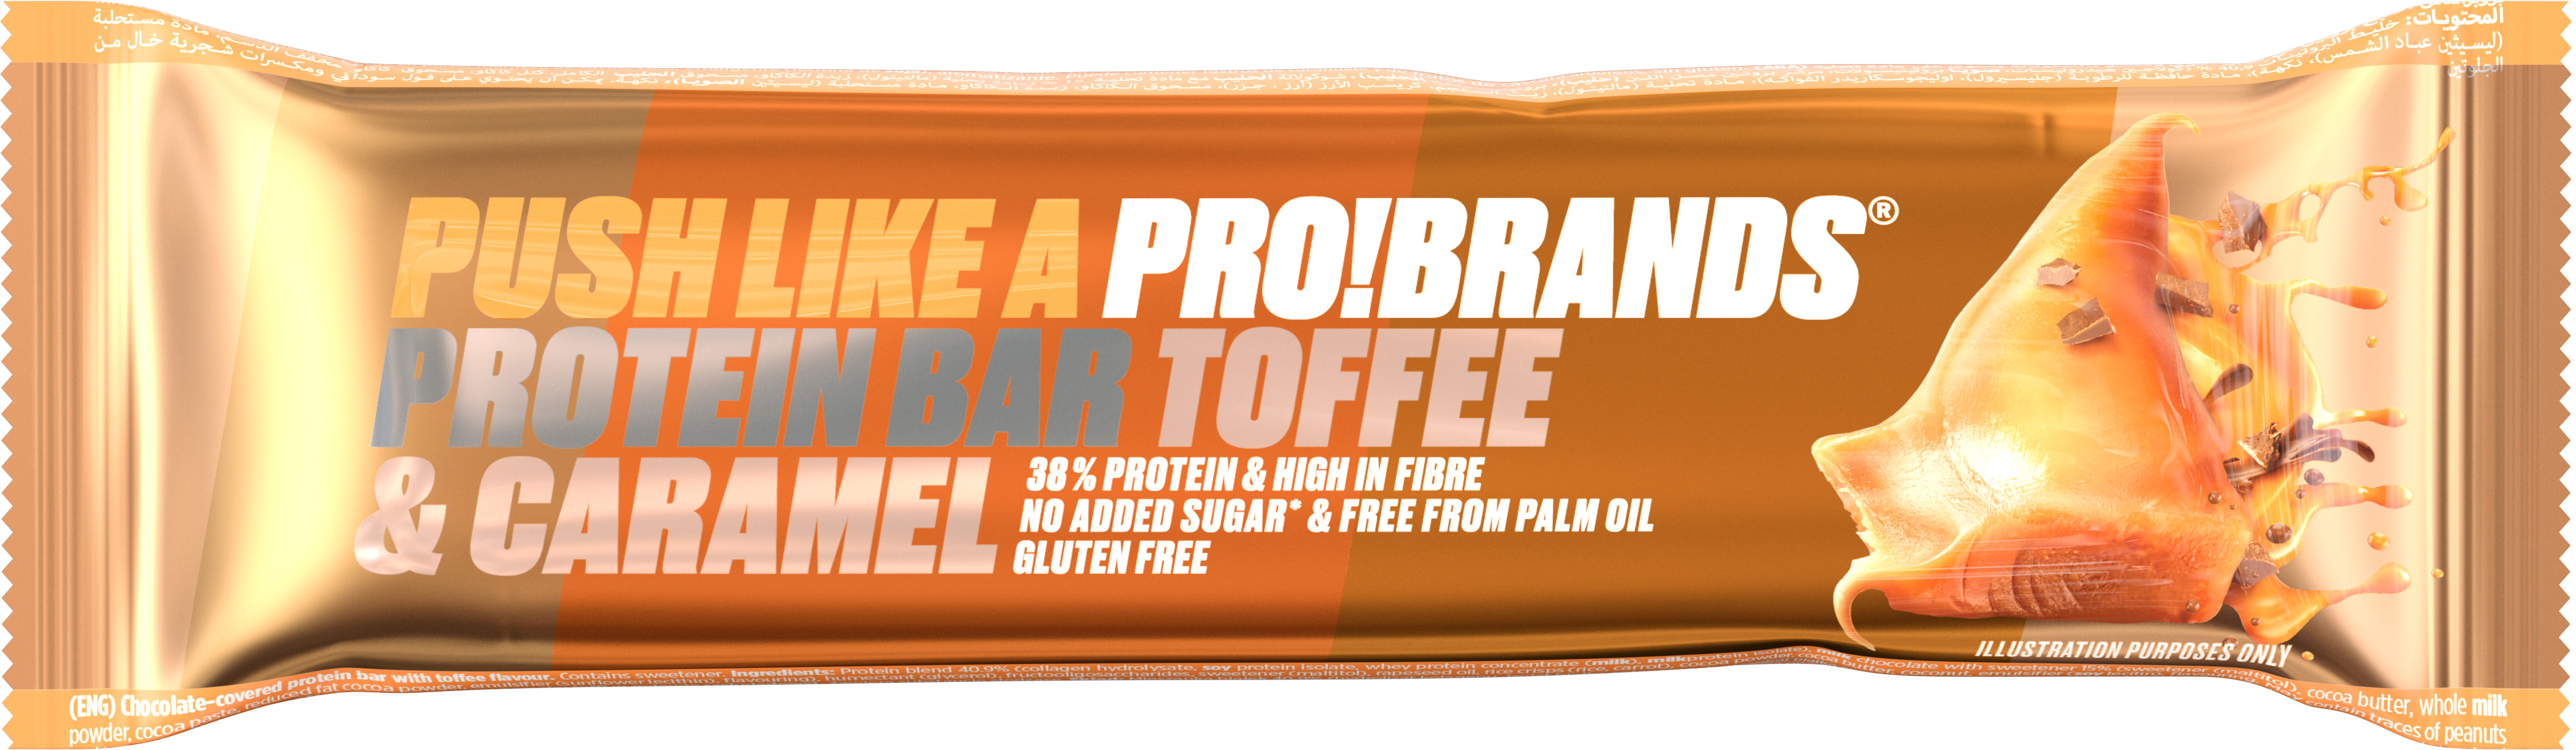 ProBrands Protein Bar Toffee & Caramel 45g